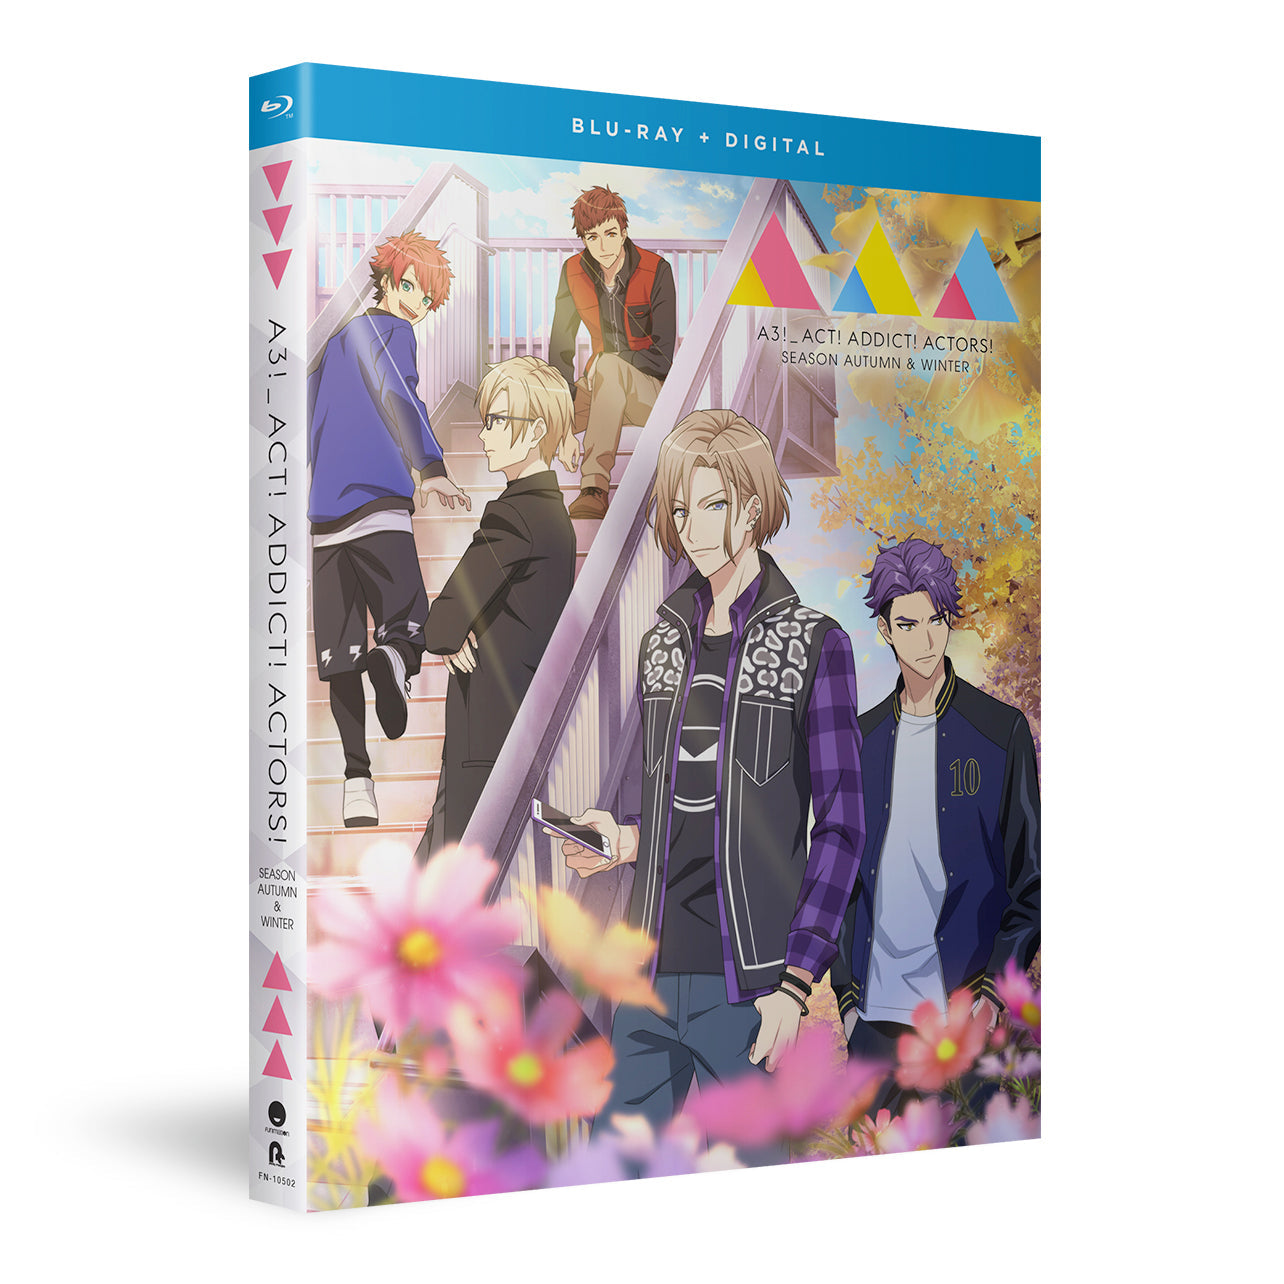 A3! - Season Autumn & Winter - Blu-ray image count 2